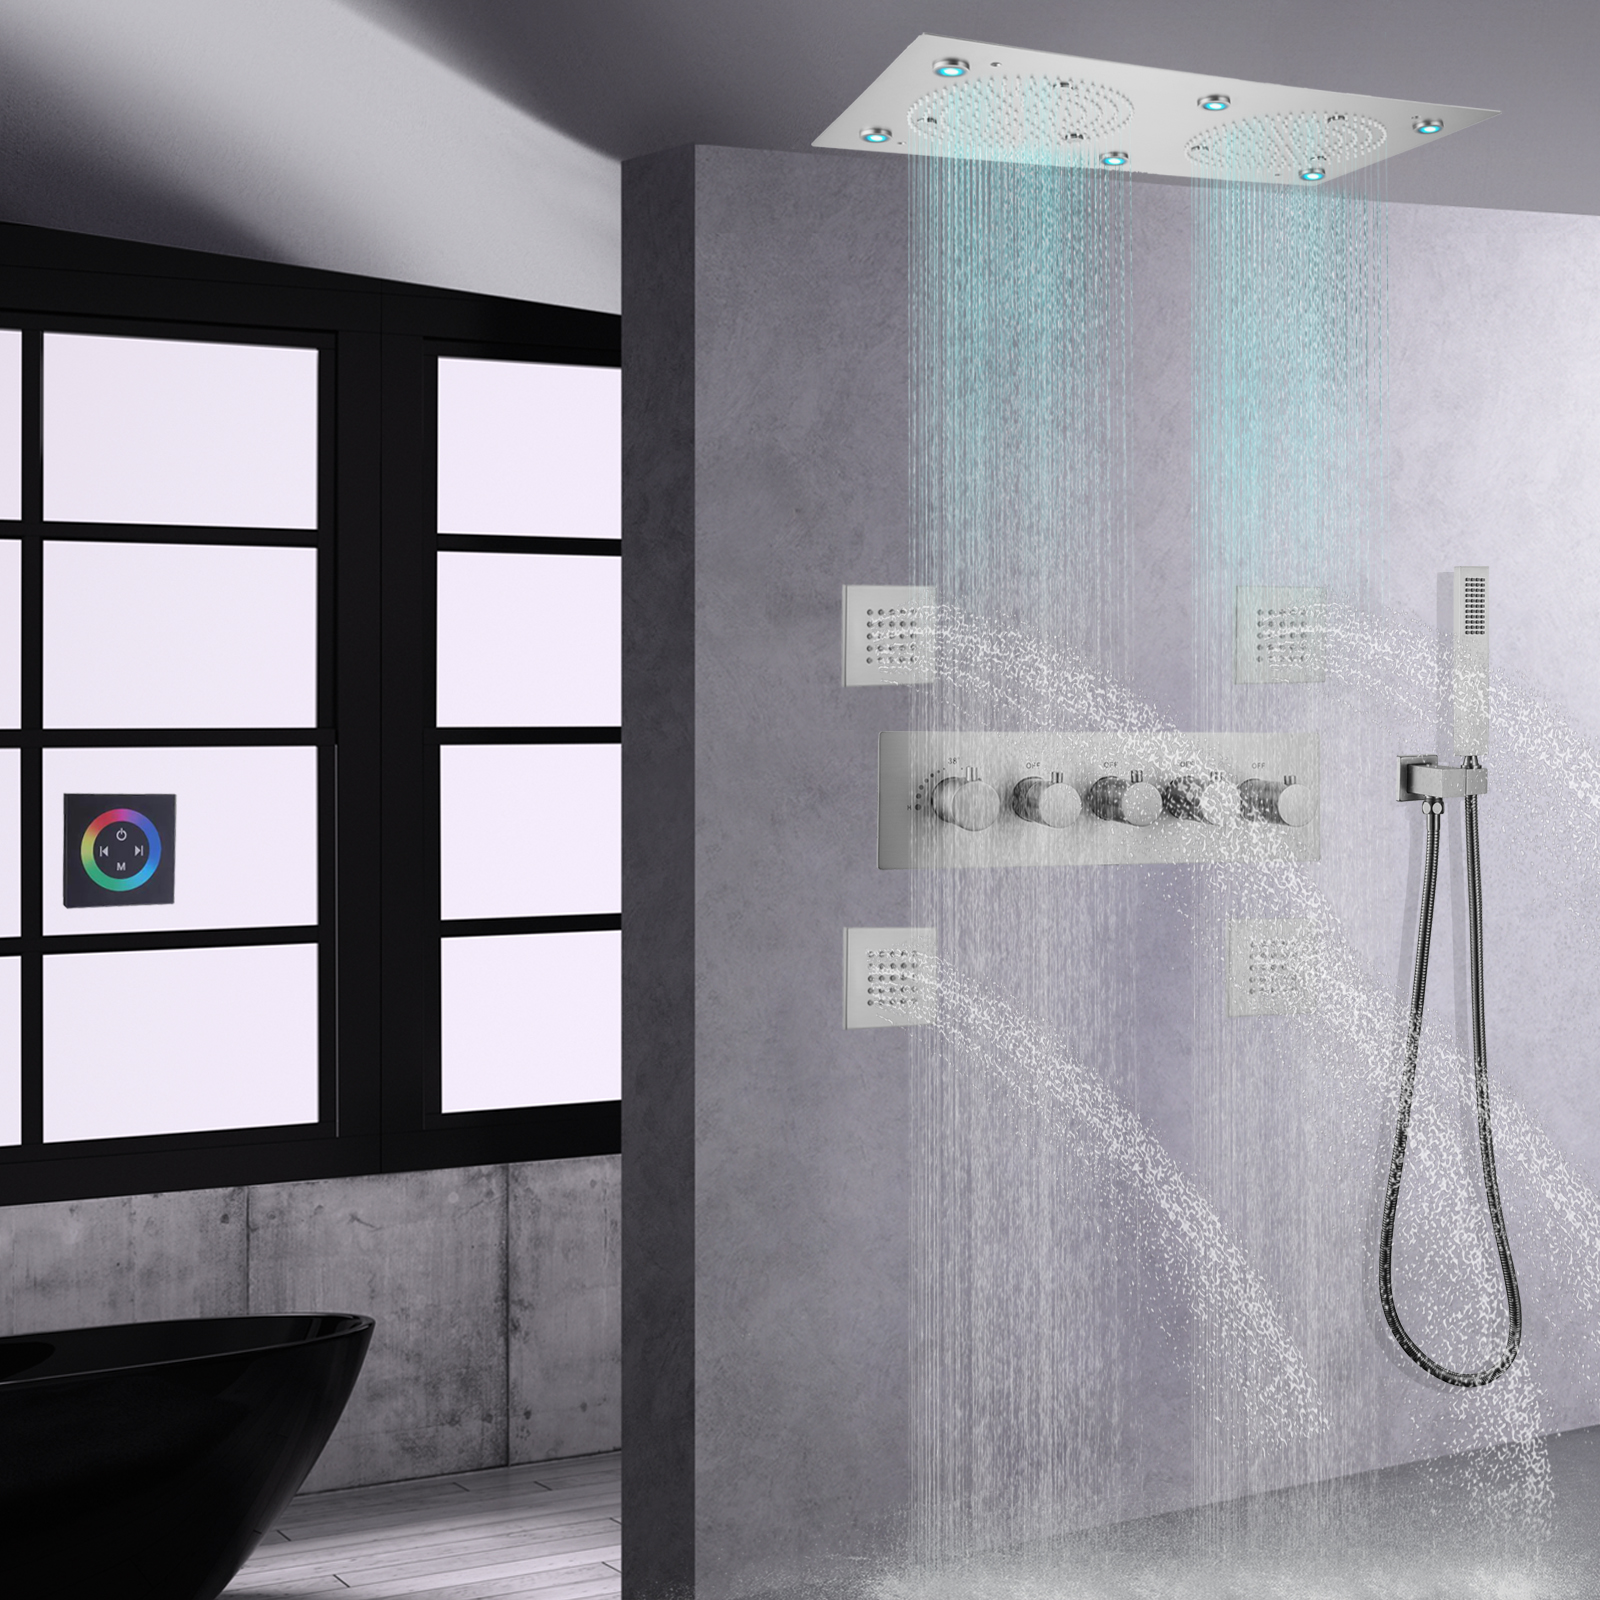 Sistema de chuveiro termostático de níquel escovado, acessórios para torneira de banheiro, conjunto de chuveiro